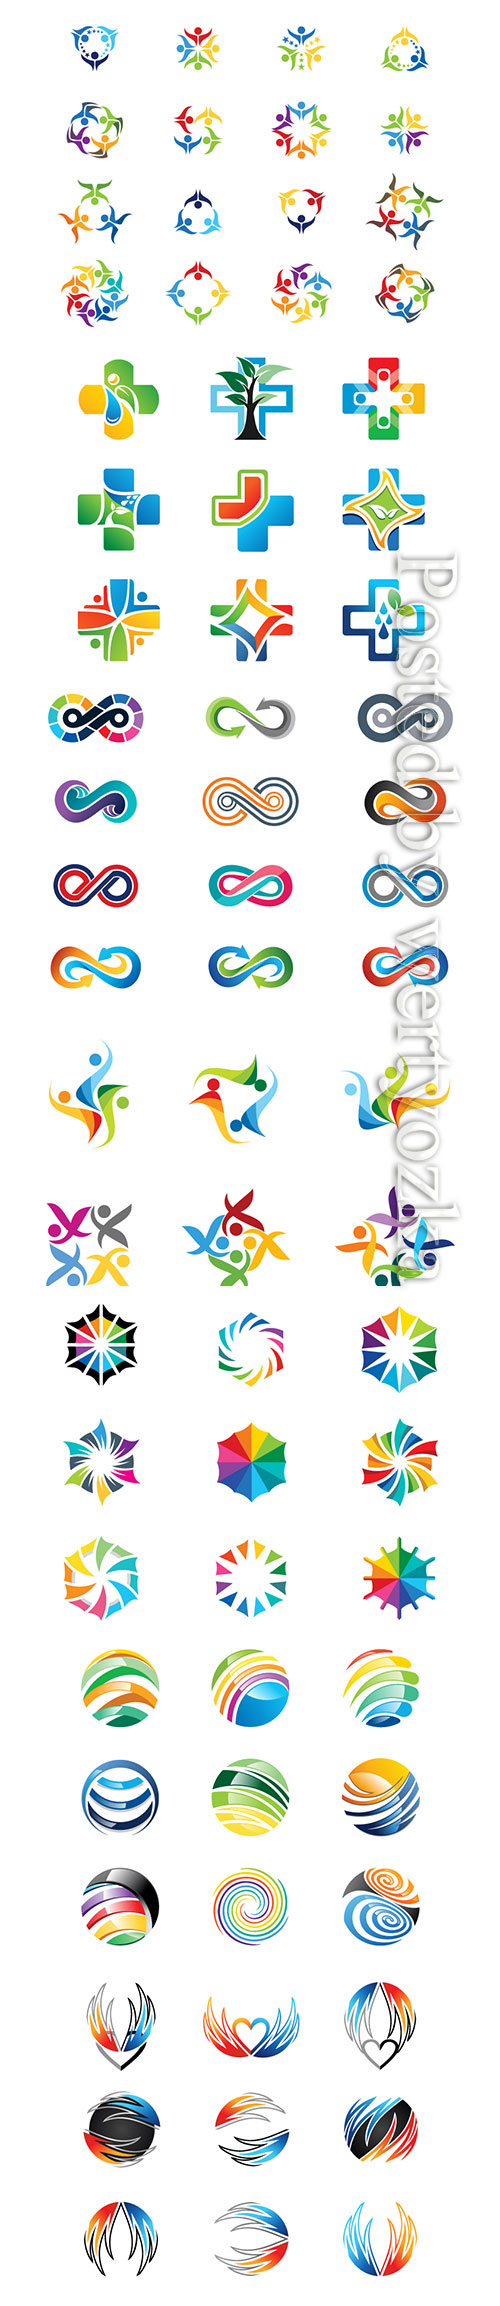 Designer logos in vector